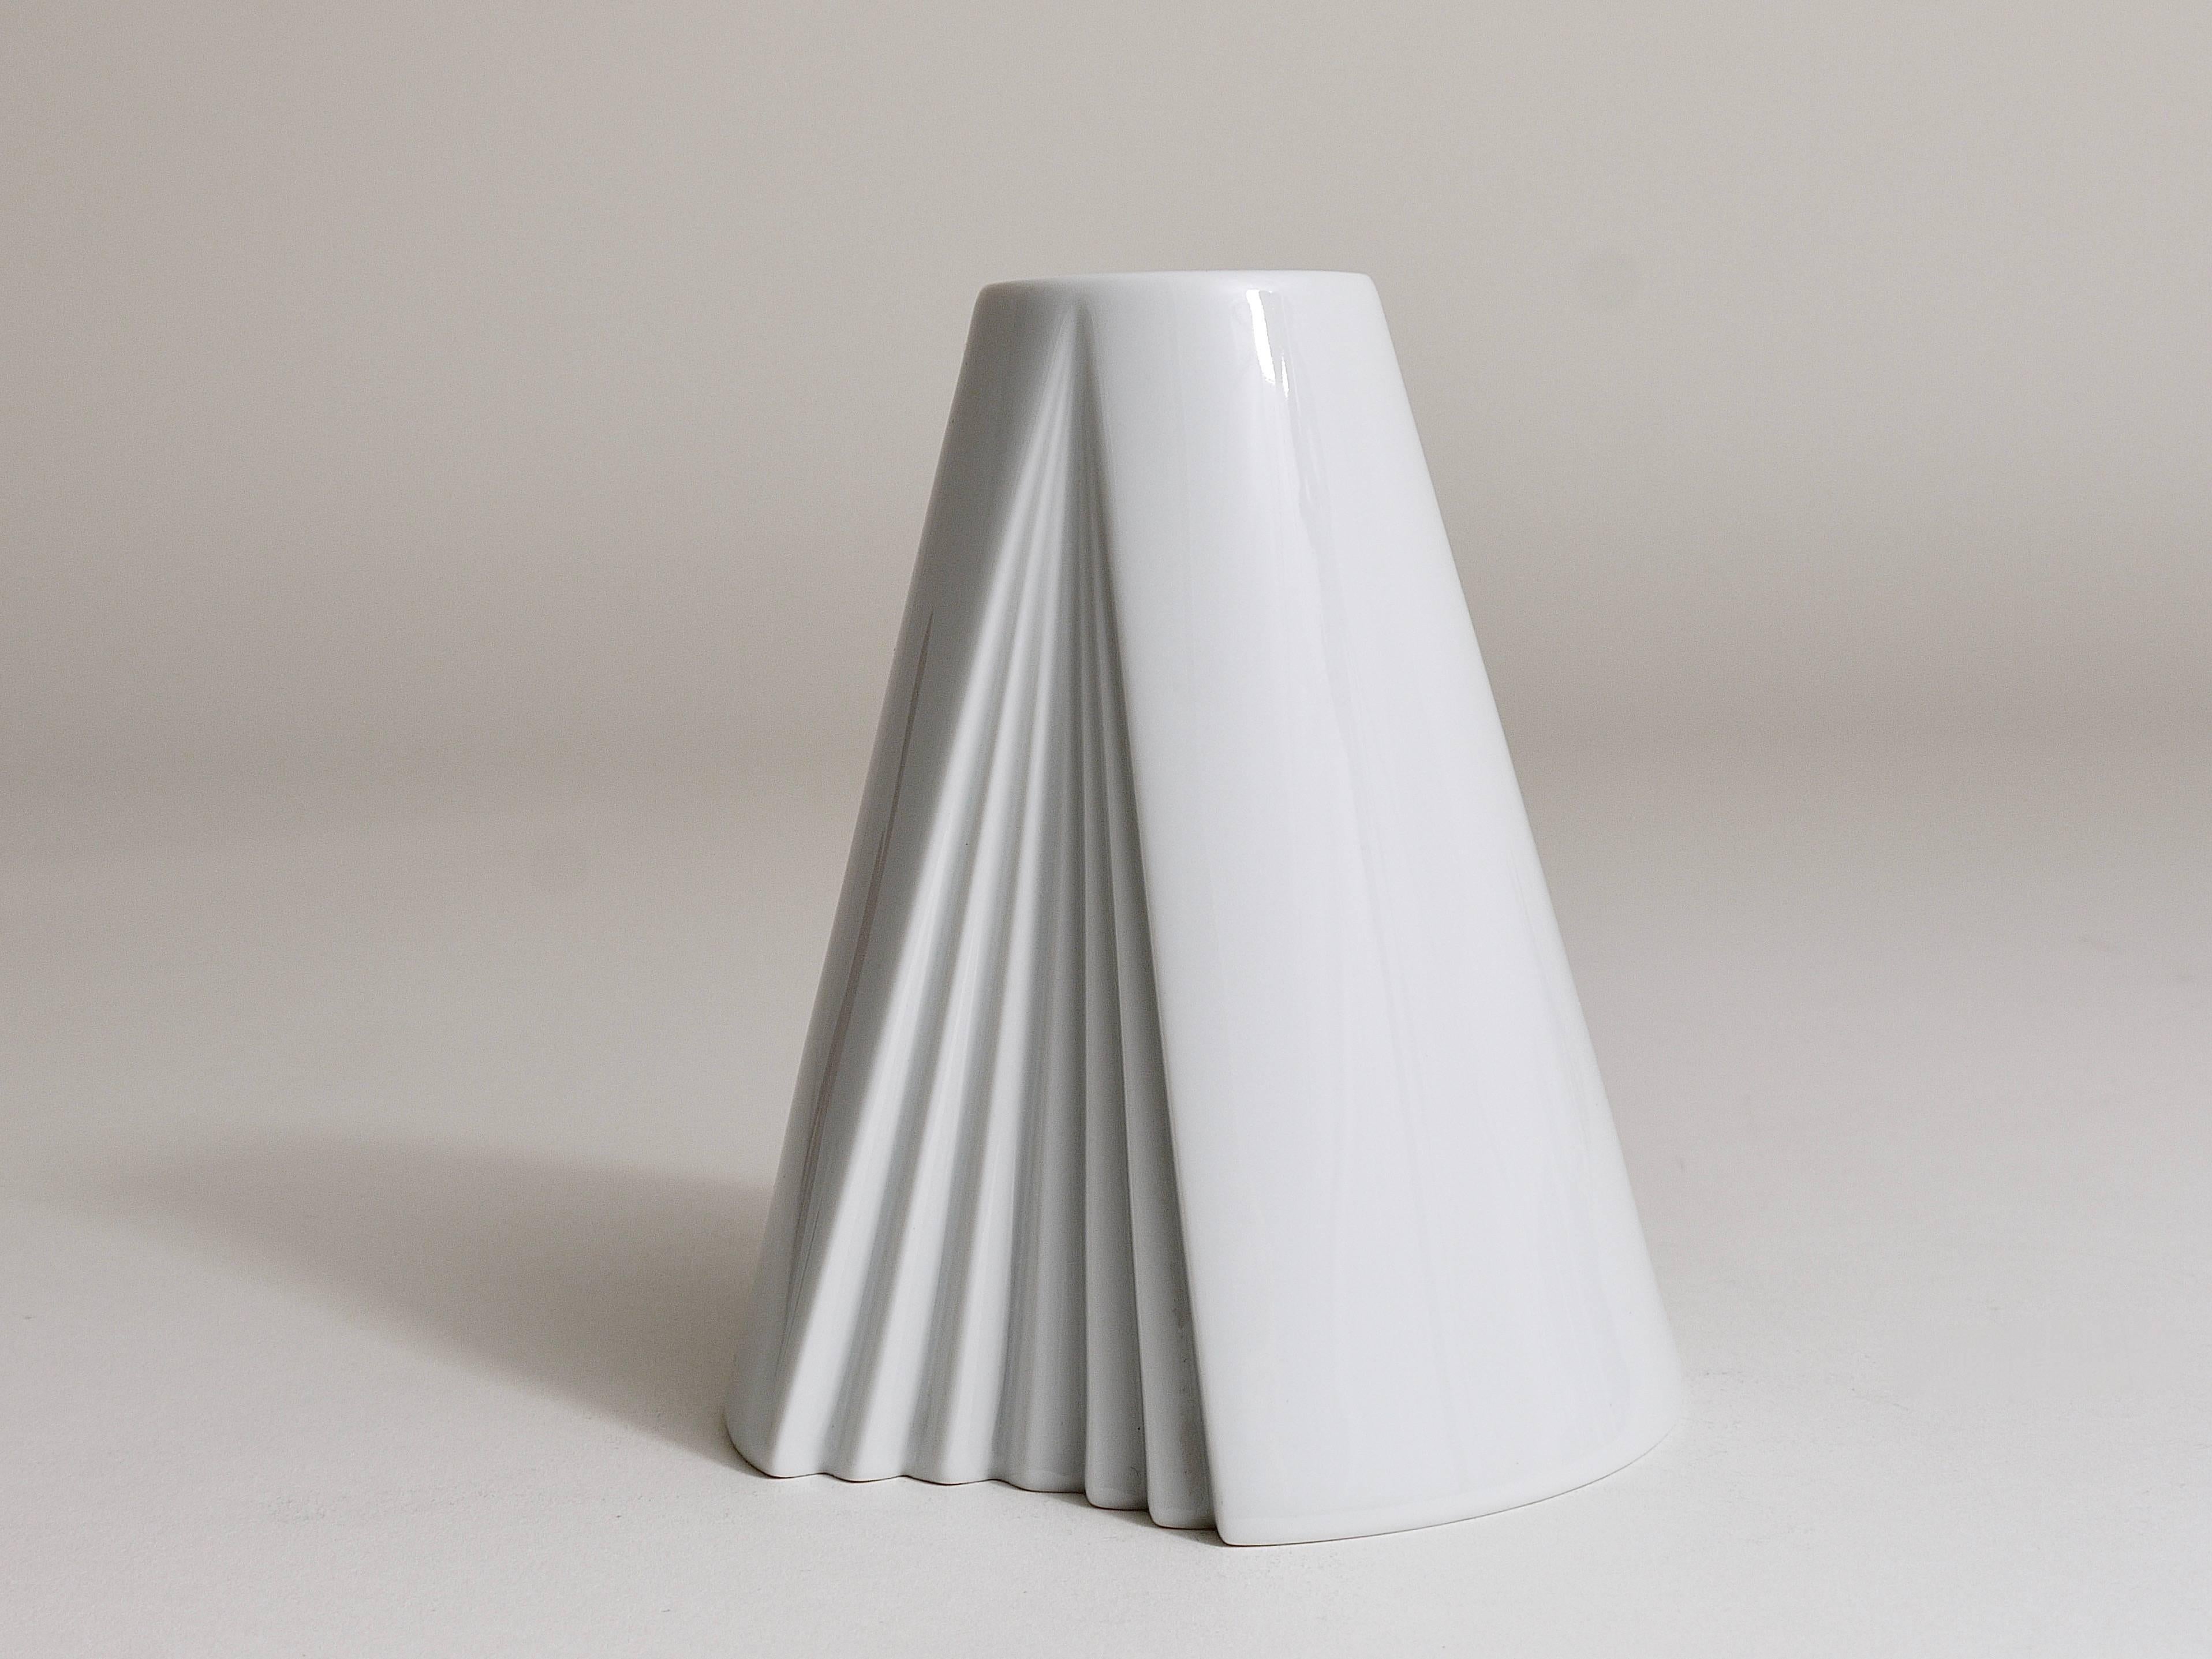 Ambrogio Pozzi Rosenthal White Geometric Op Art Porcelain Vase, Germany, 1980s For Sale 3